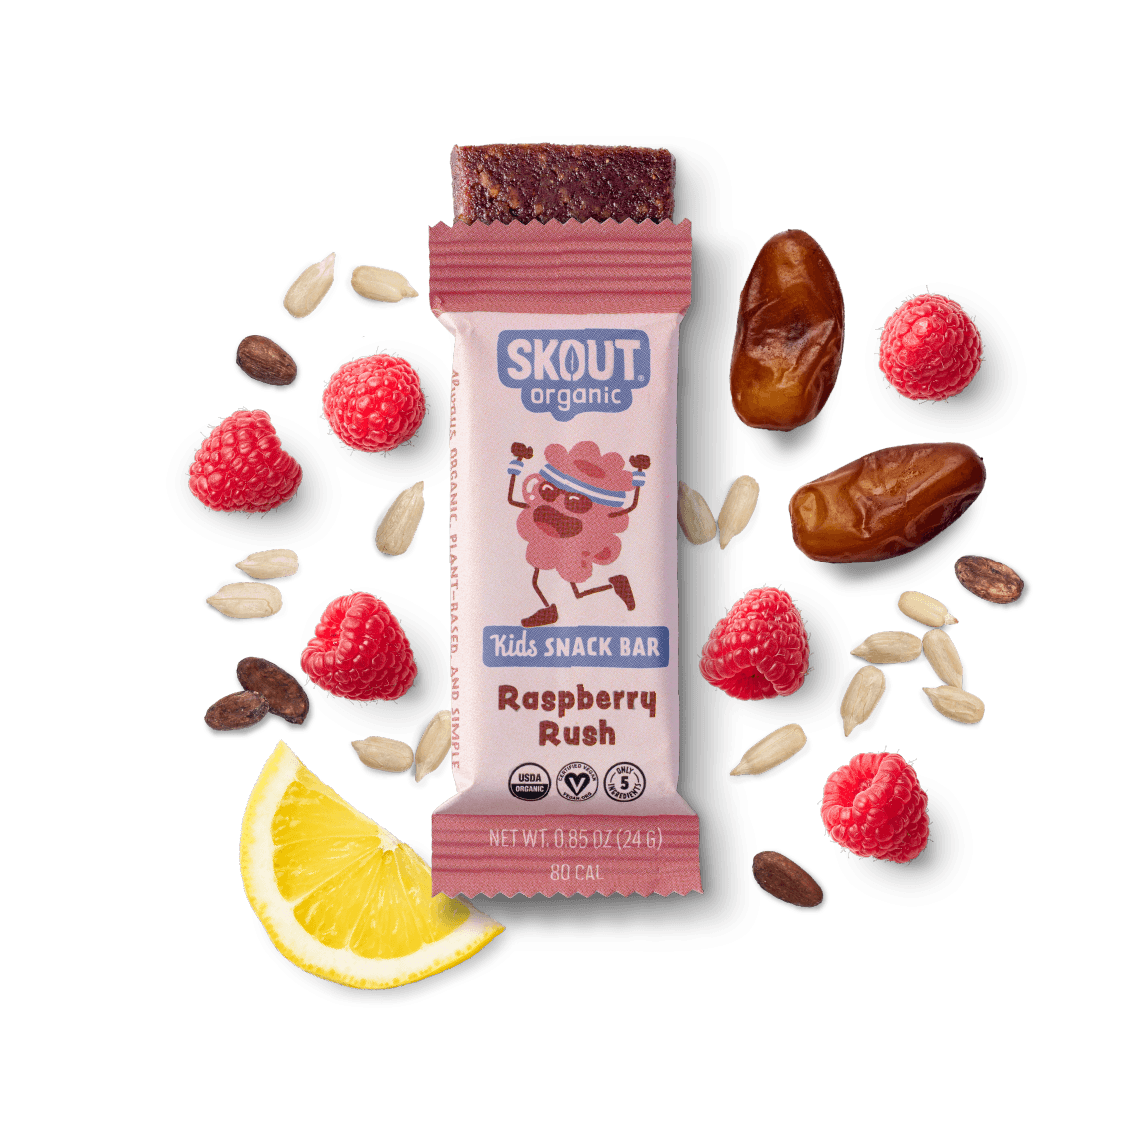 skout-organic-raspberry-rush-kids-bar-or